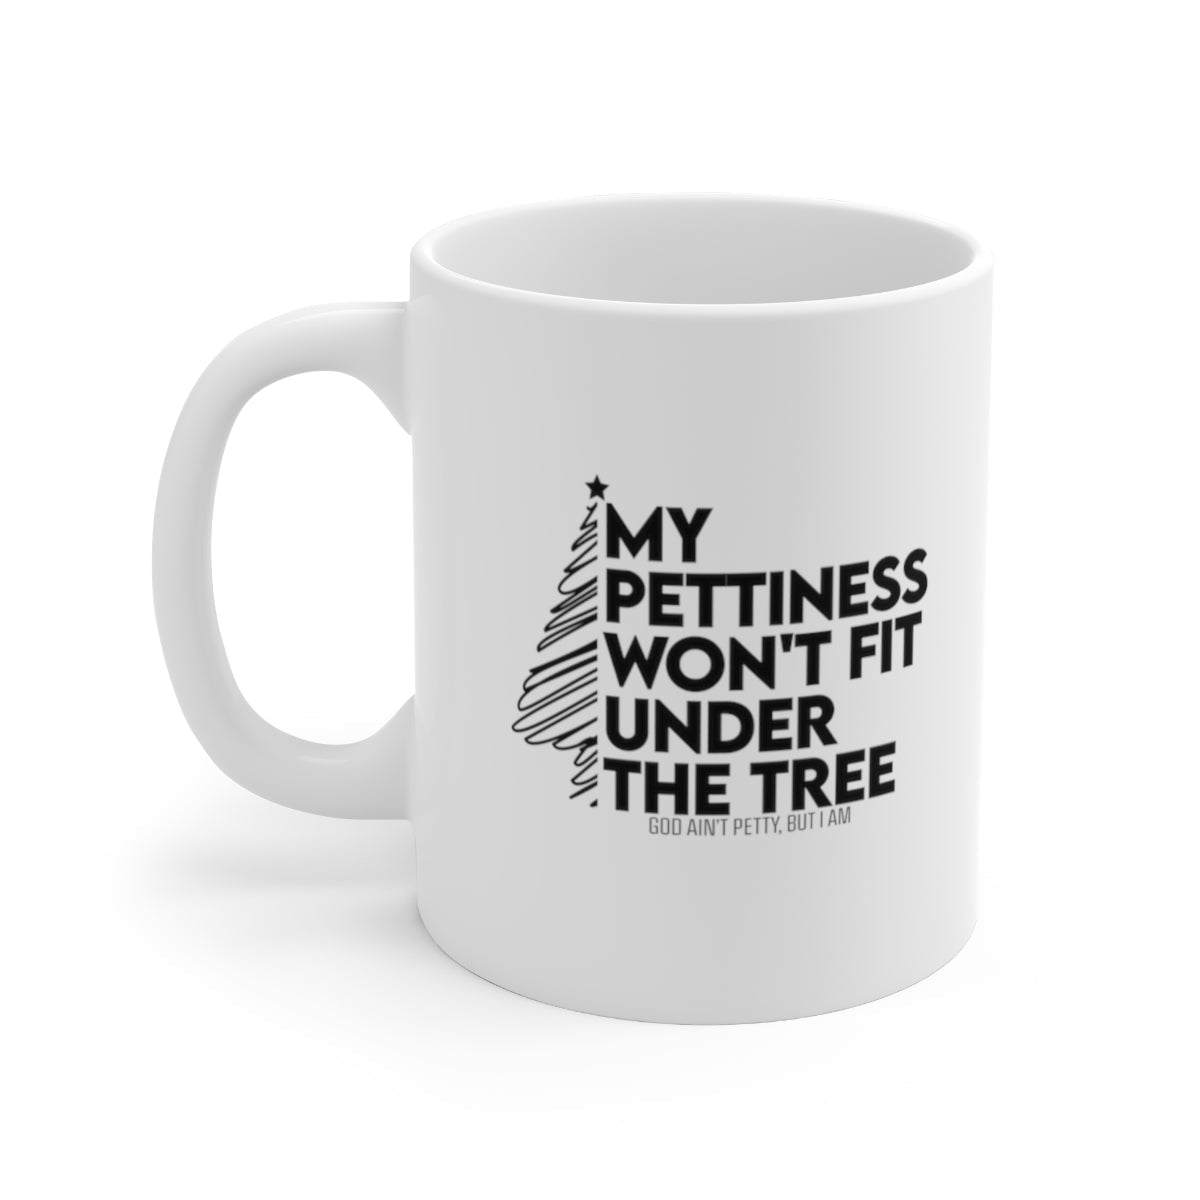 My Pettiness Won't Fit under the Tree Mug 11oz (White/Black)-Mug-The Original God Ain't Petty But I Am